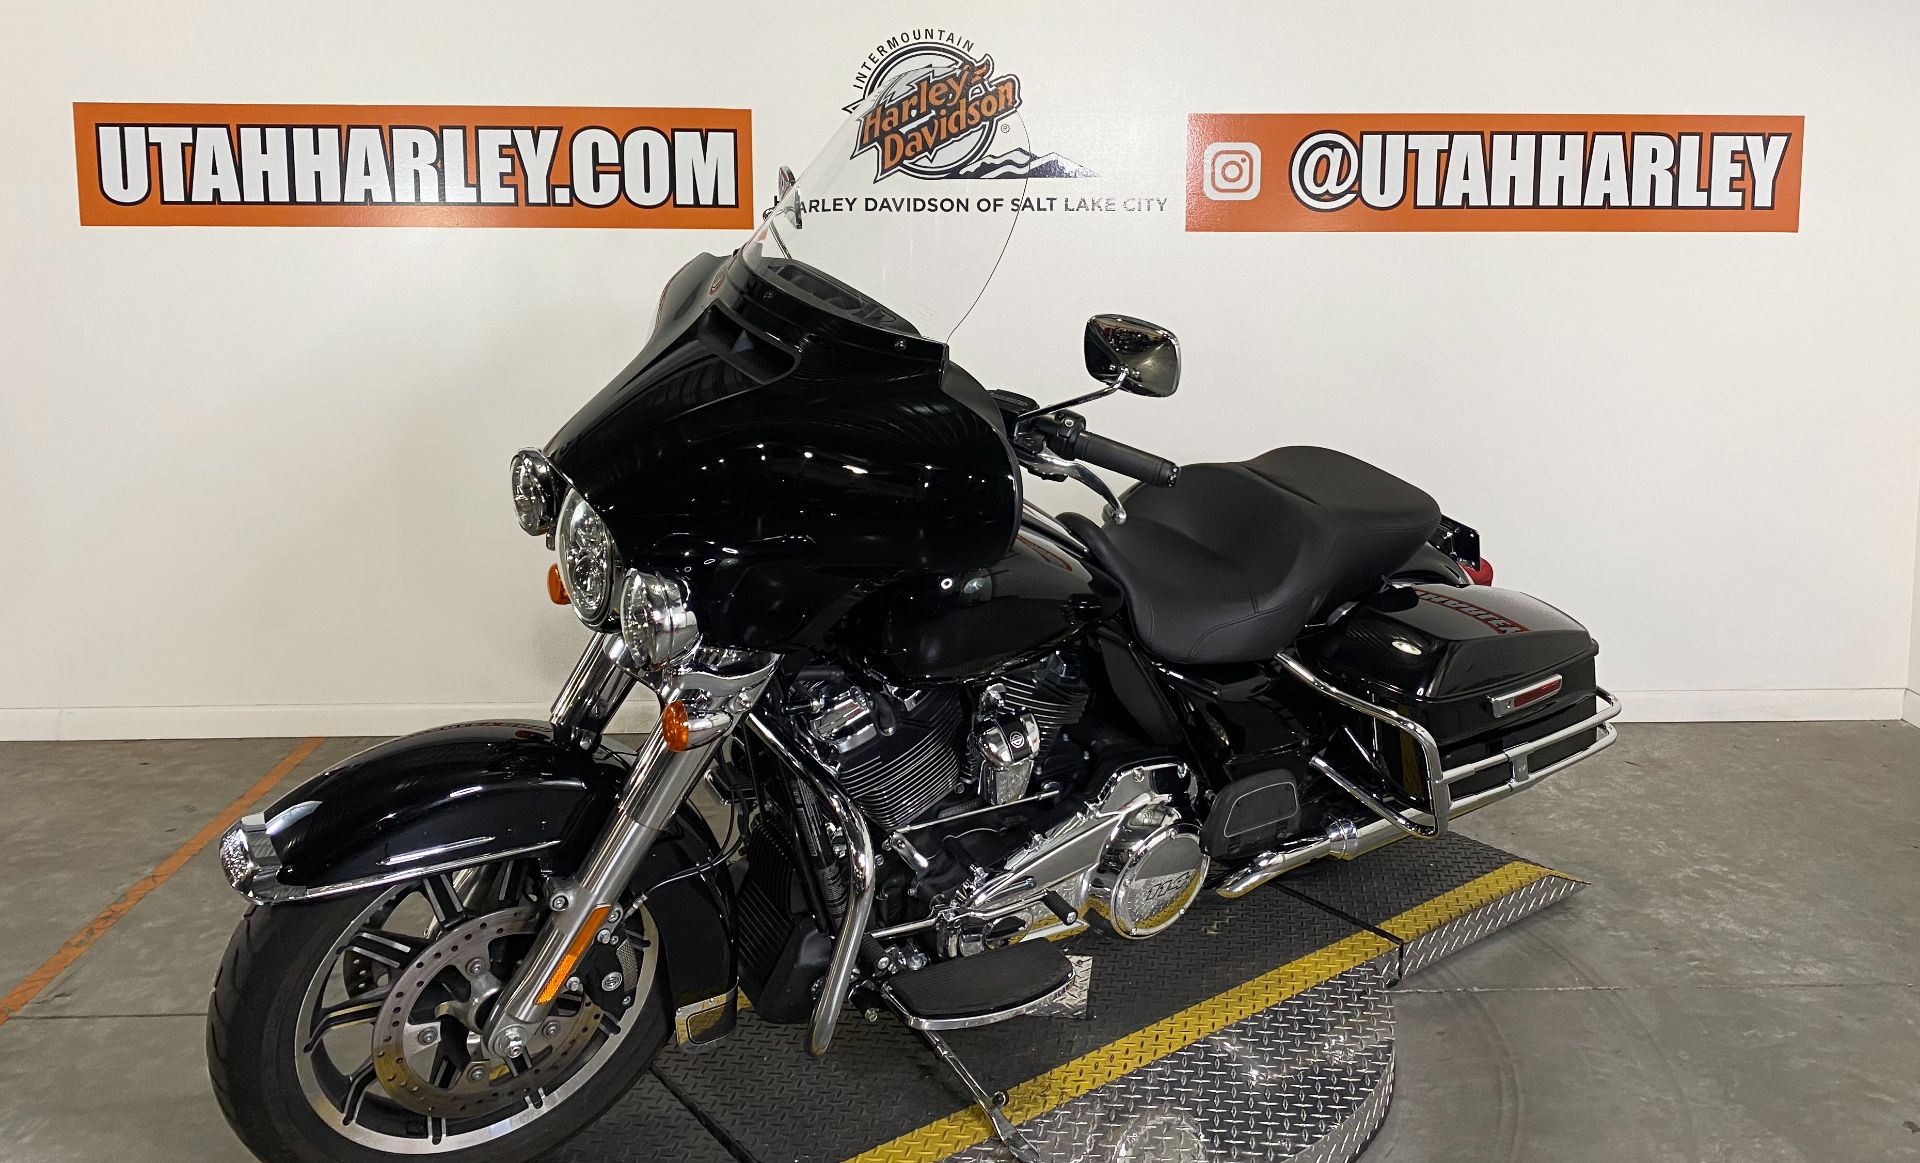 2020 Harley-Davidson Electra Glide Police - 114 motor in Salt Lake City, Utah - Photo 4